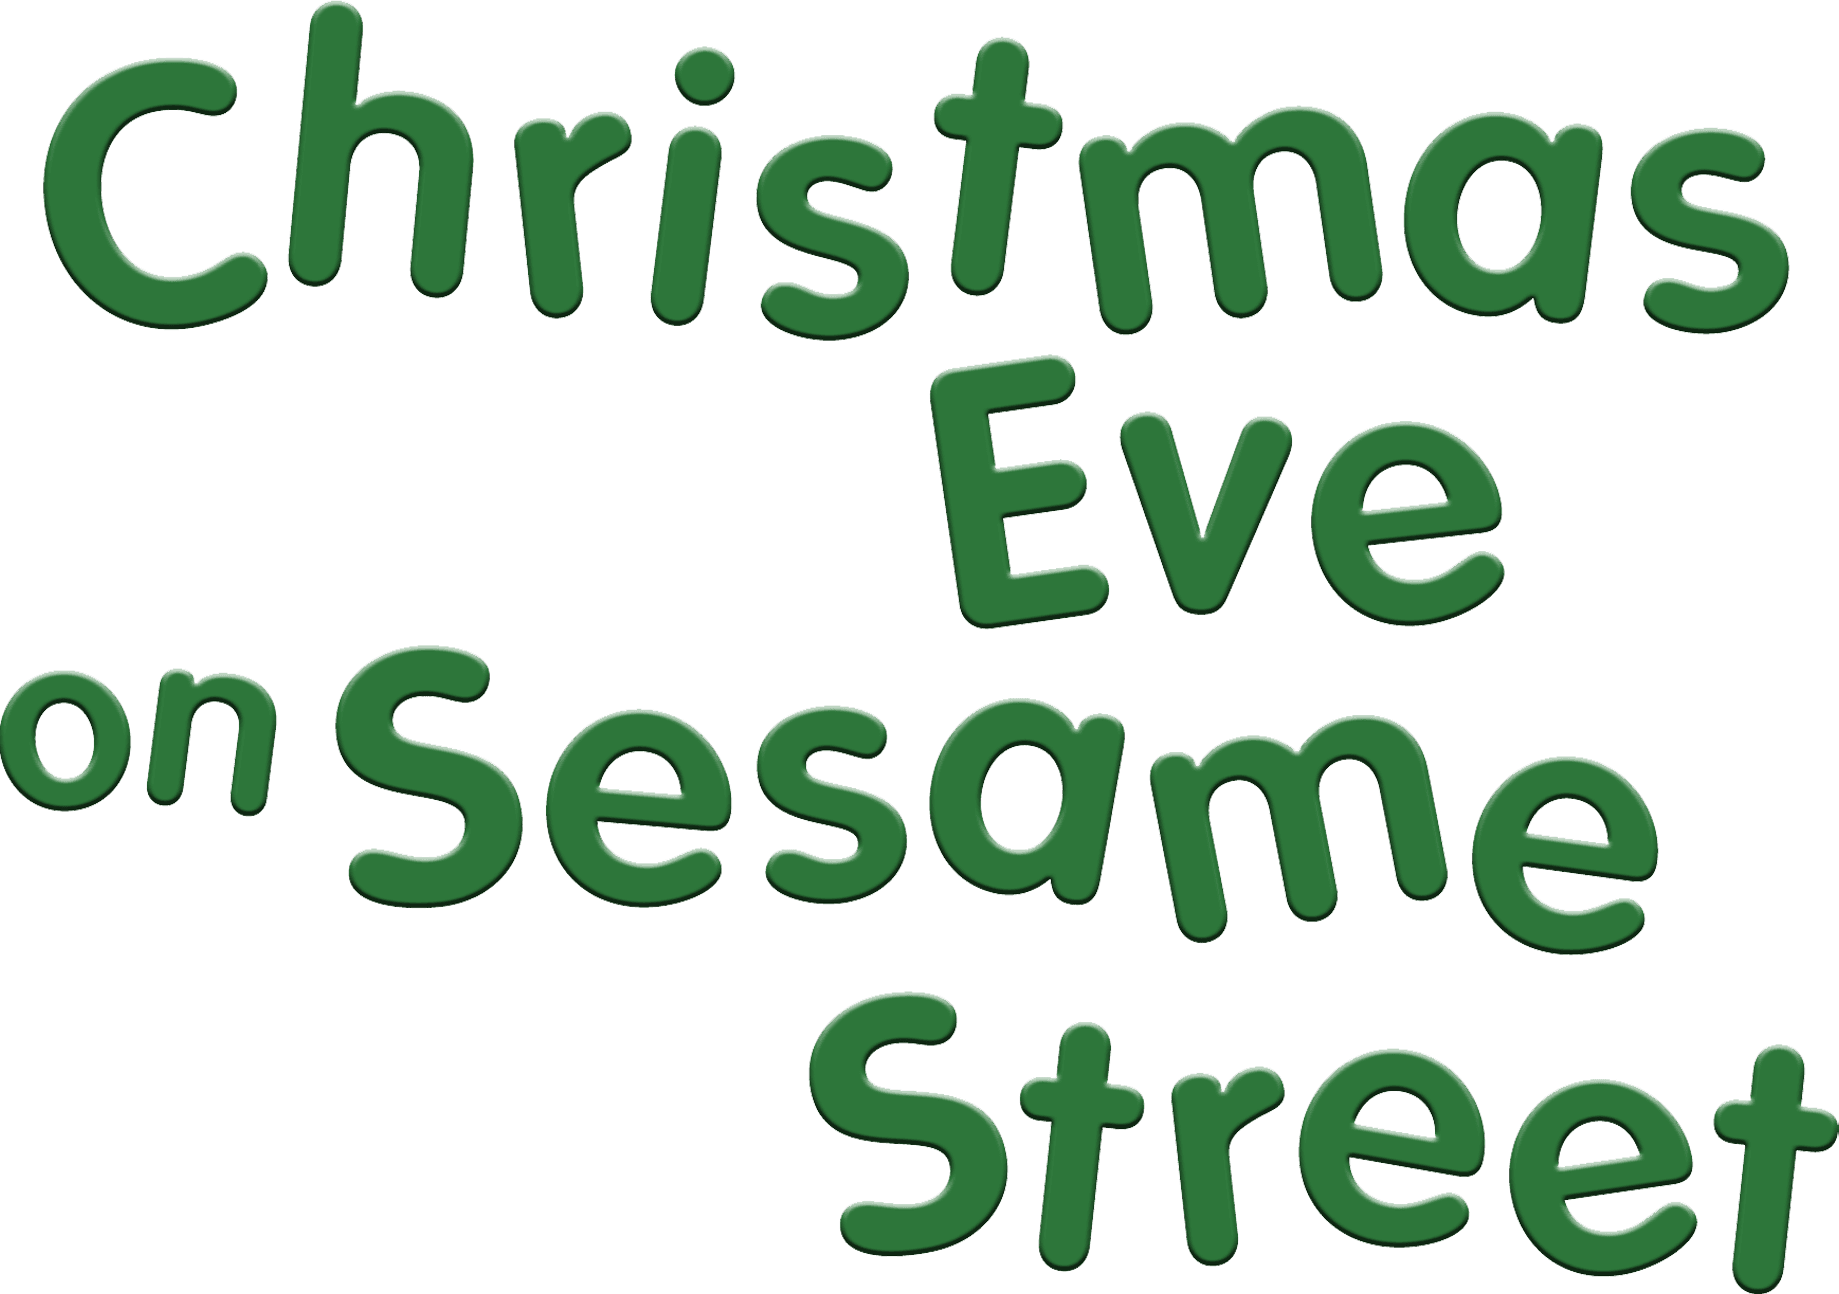 Christmas Eve on Sesame Street logo